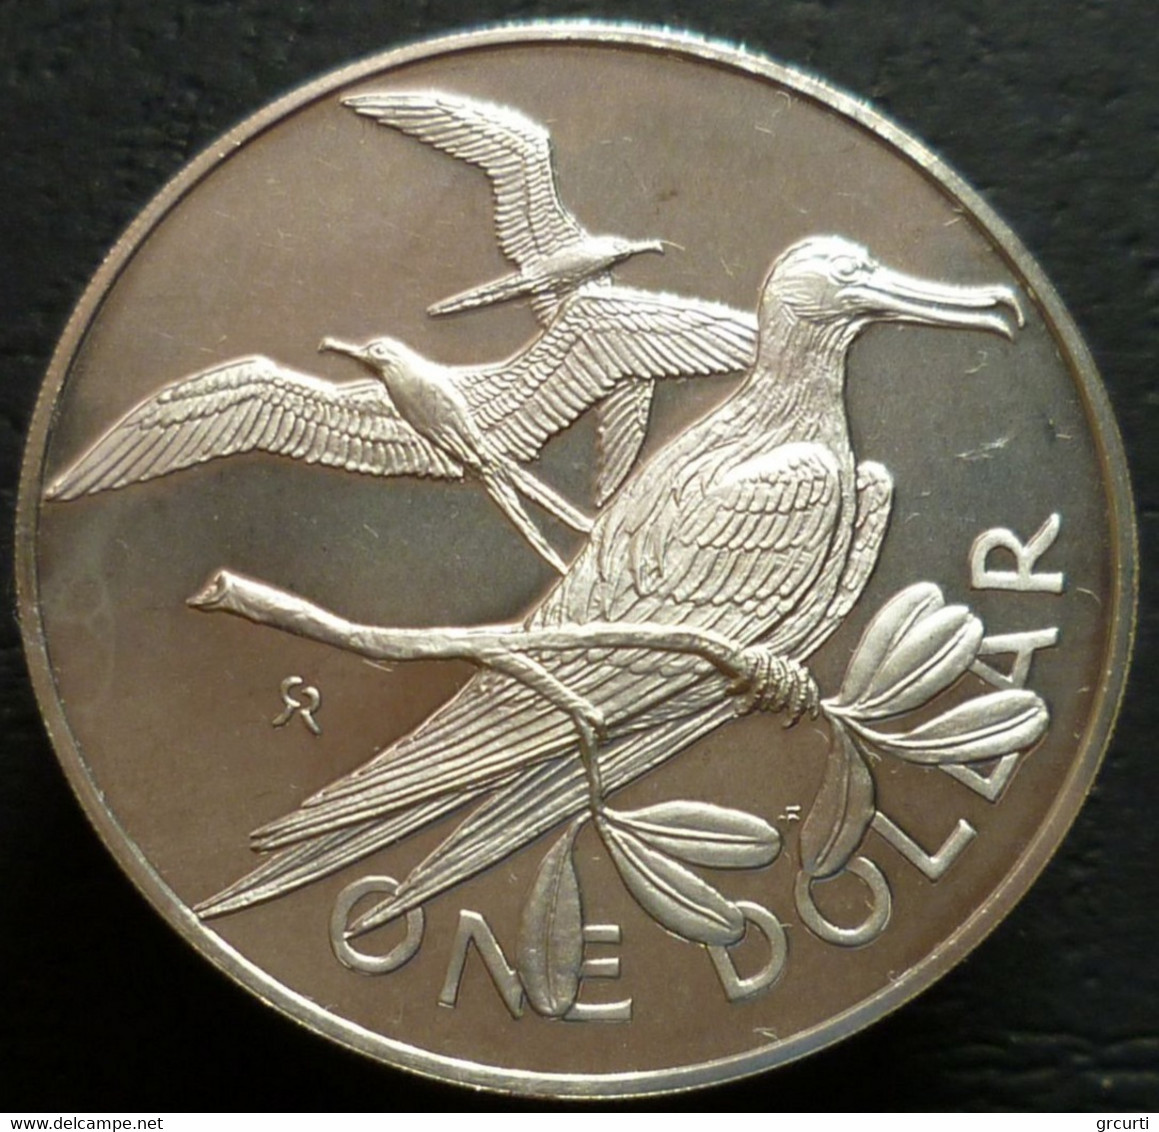 Isole Vergini Britanniche - 1 Dollar 1974 - KM# 6a - Iles Vièrges Britanniques